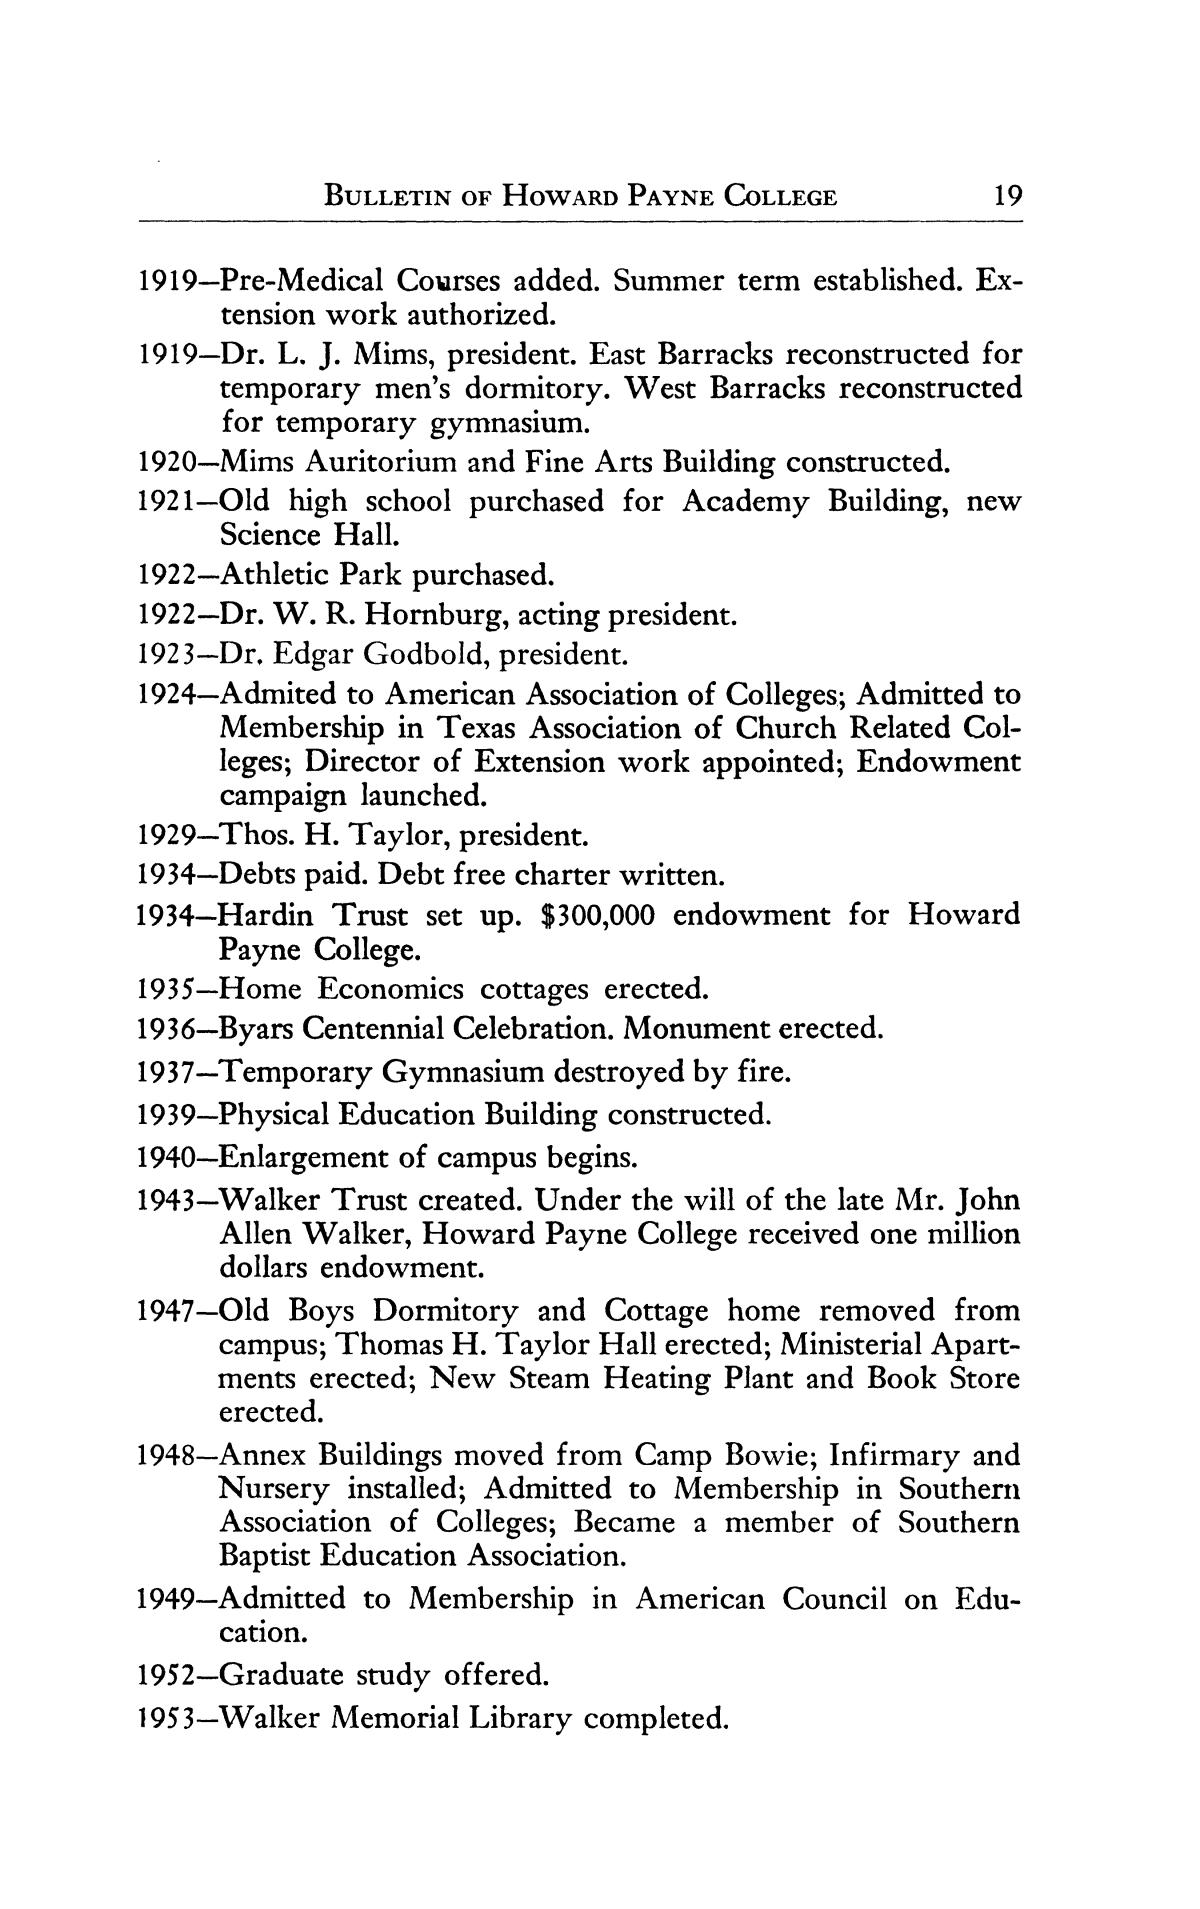 Catalog of Howard Payne College, 1954-1955
                                                
                                                    19
                                                